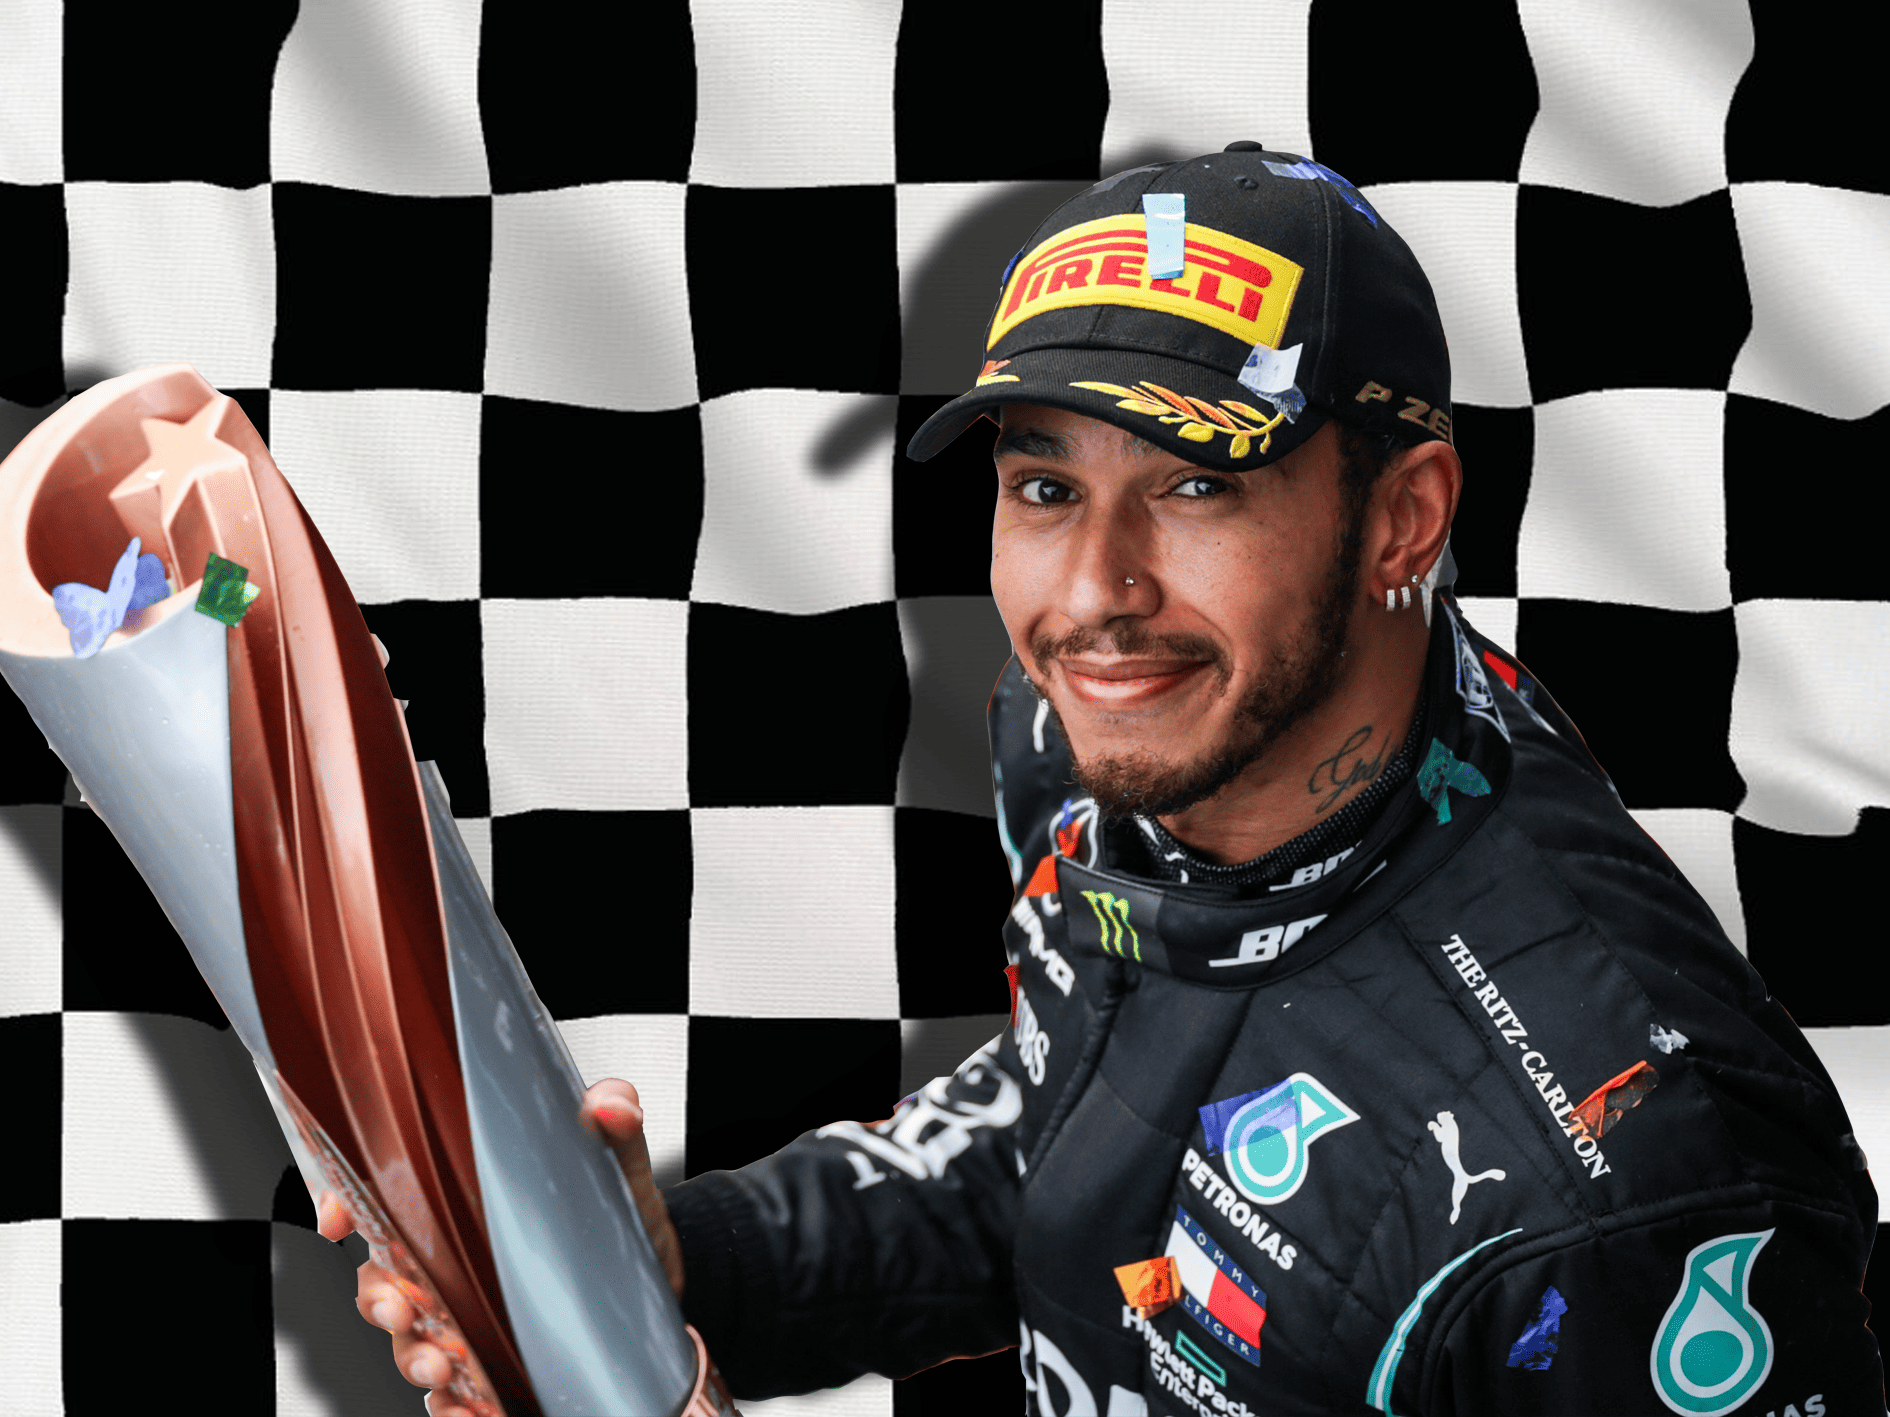 Lewis Hamilton’s Race for Diversity in Motorsport